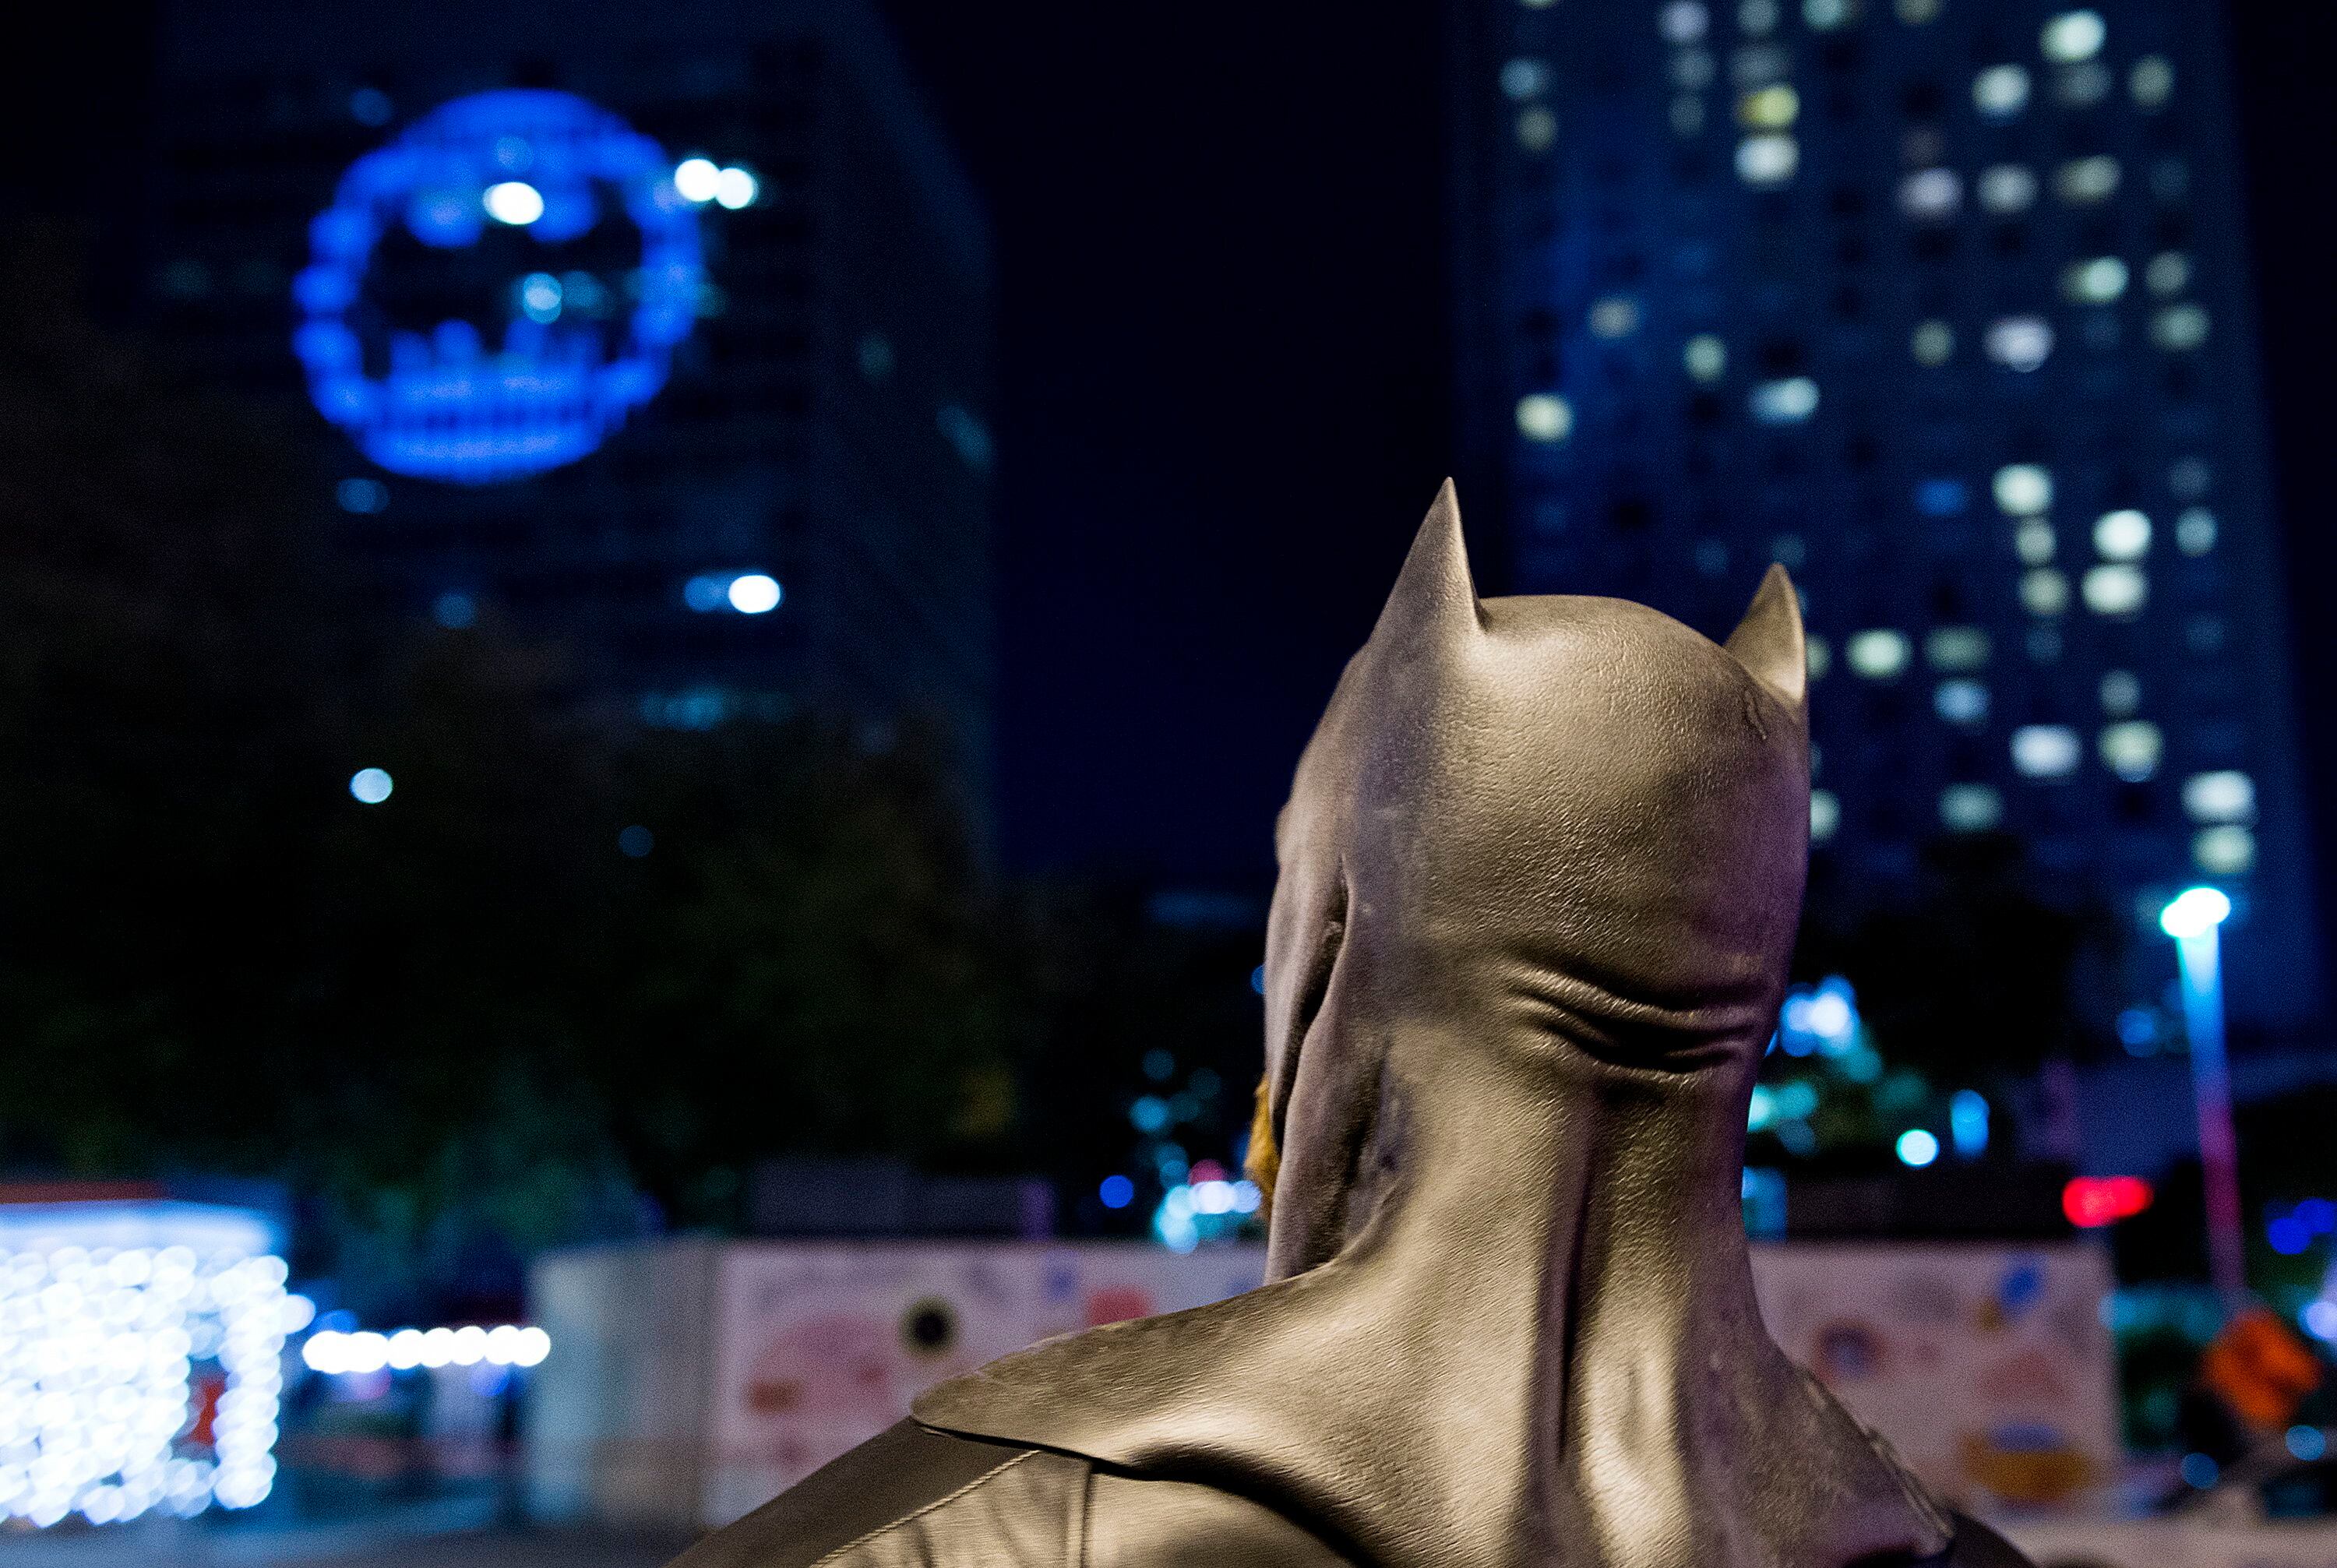 Bat Signal Lights Up New Images From 'Batman v Superman: Dawn Of Justice